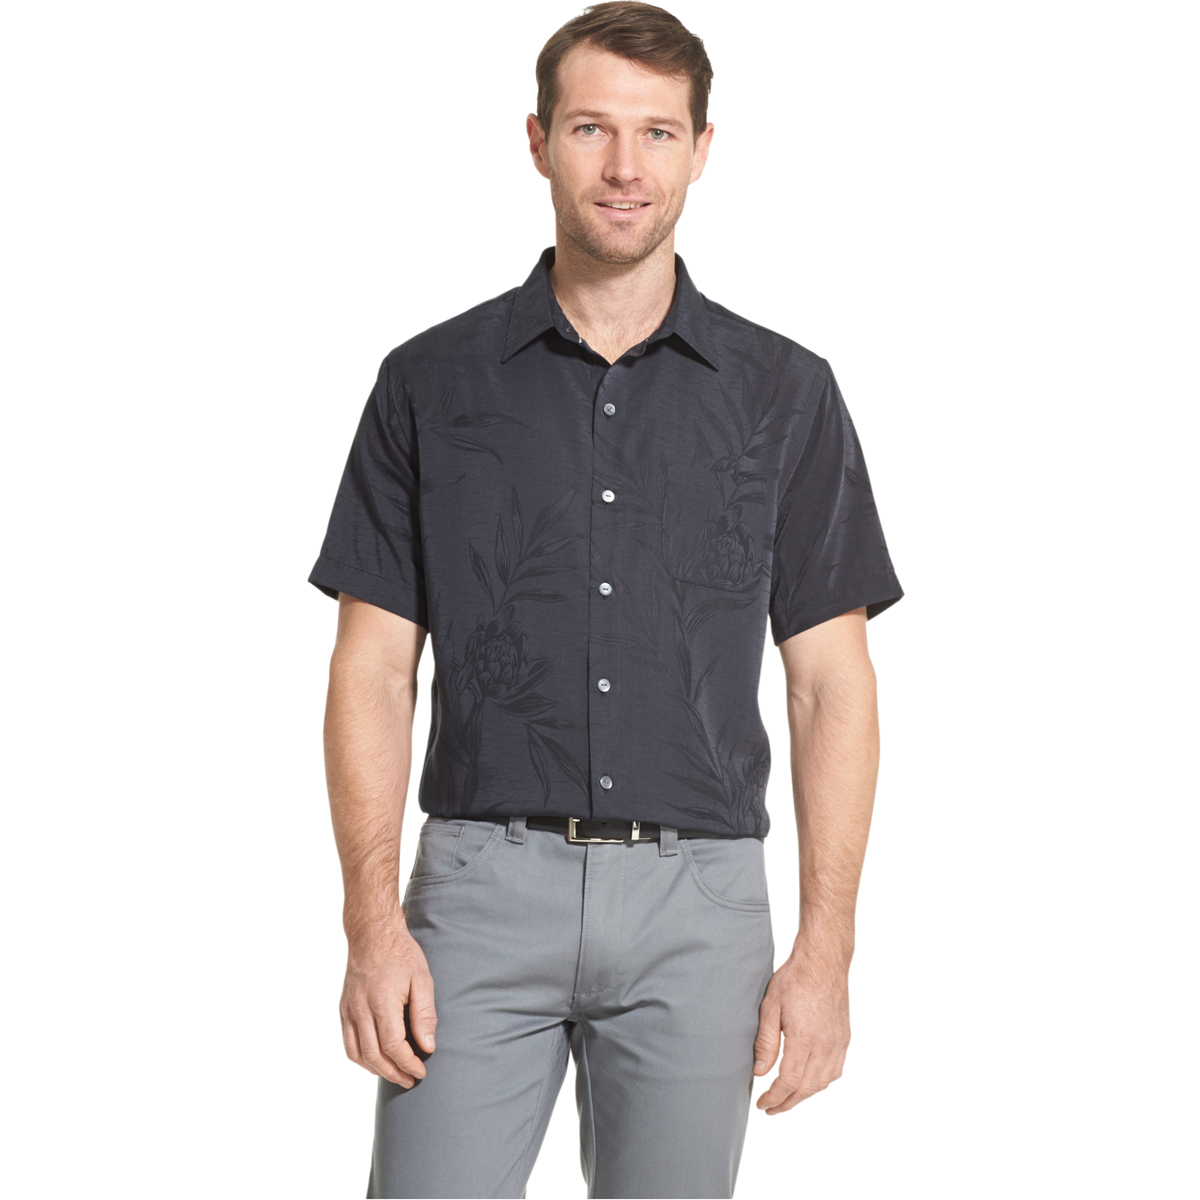 Van Heusen Men's Jaquard Short-Sleeve Shirt - Black, L